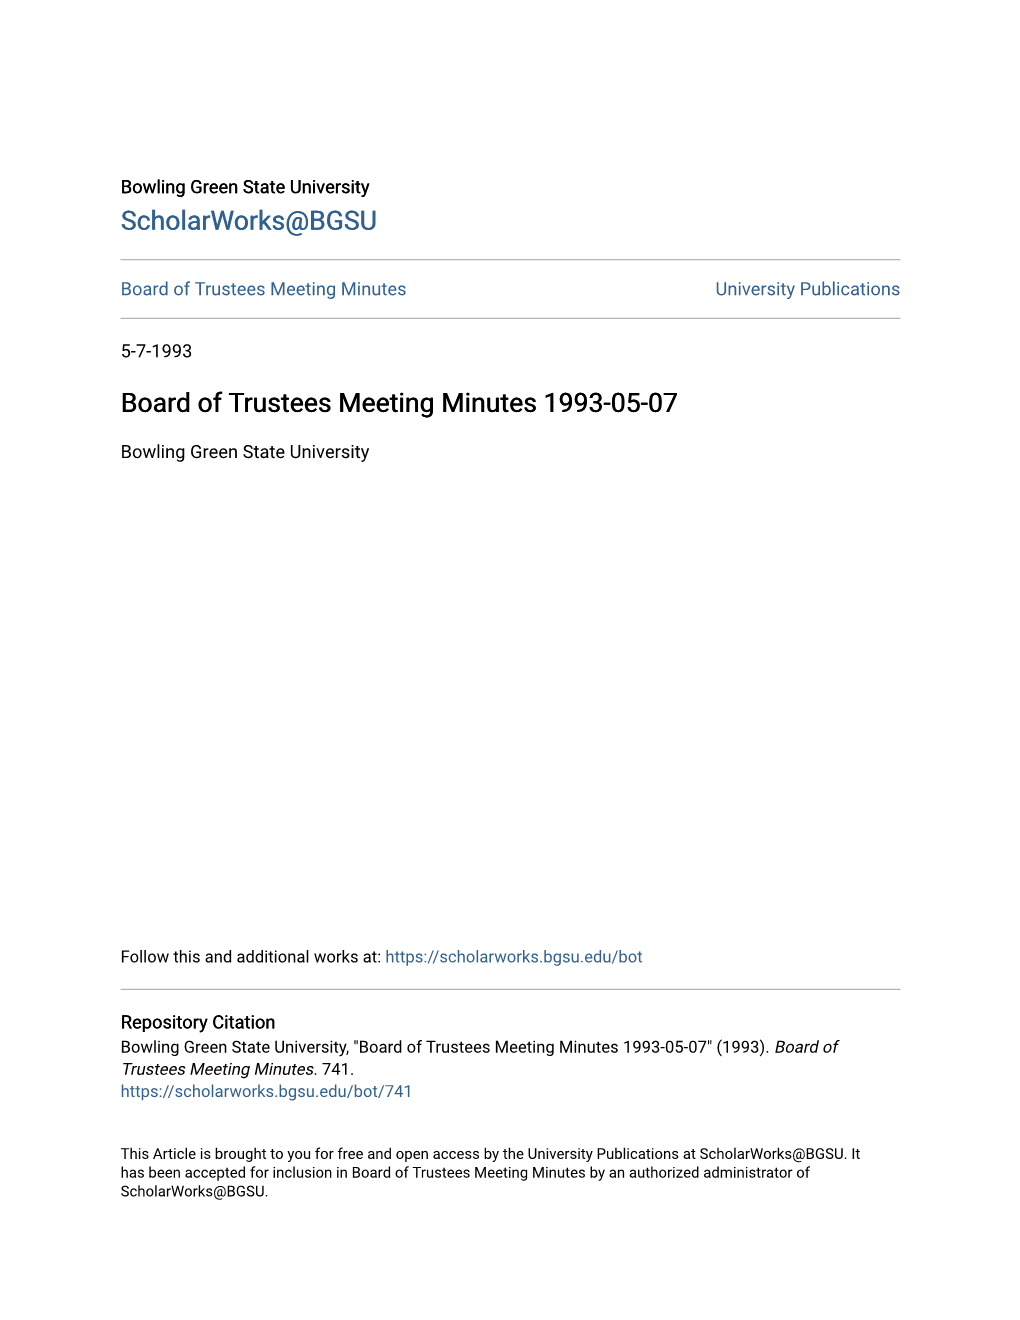 Board of Trustees Meeting Minutes 1993-05-07